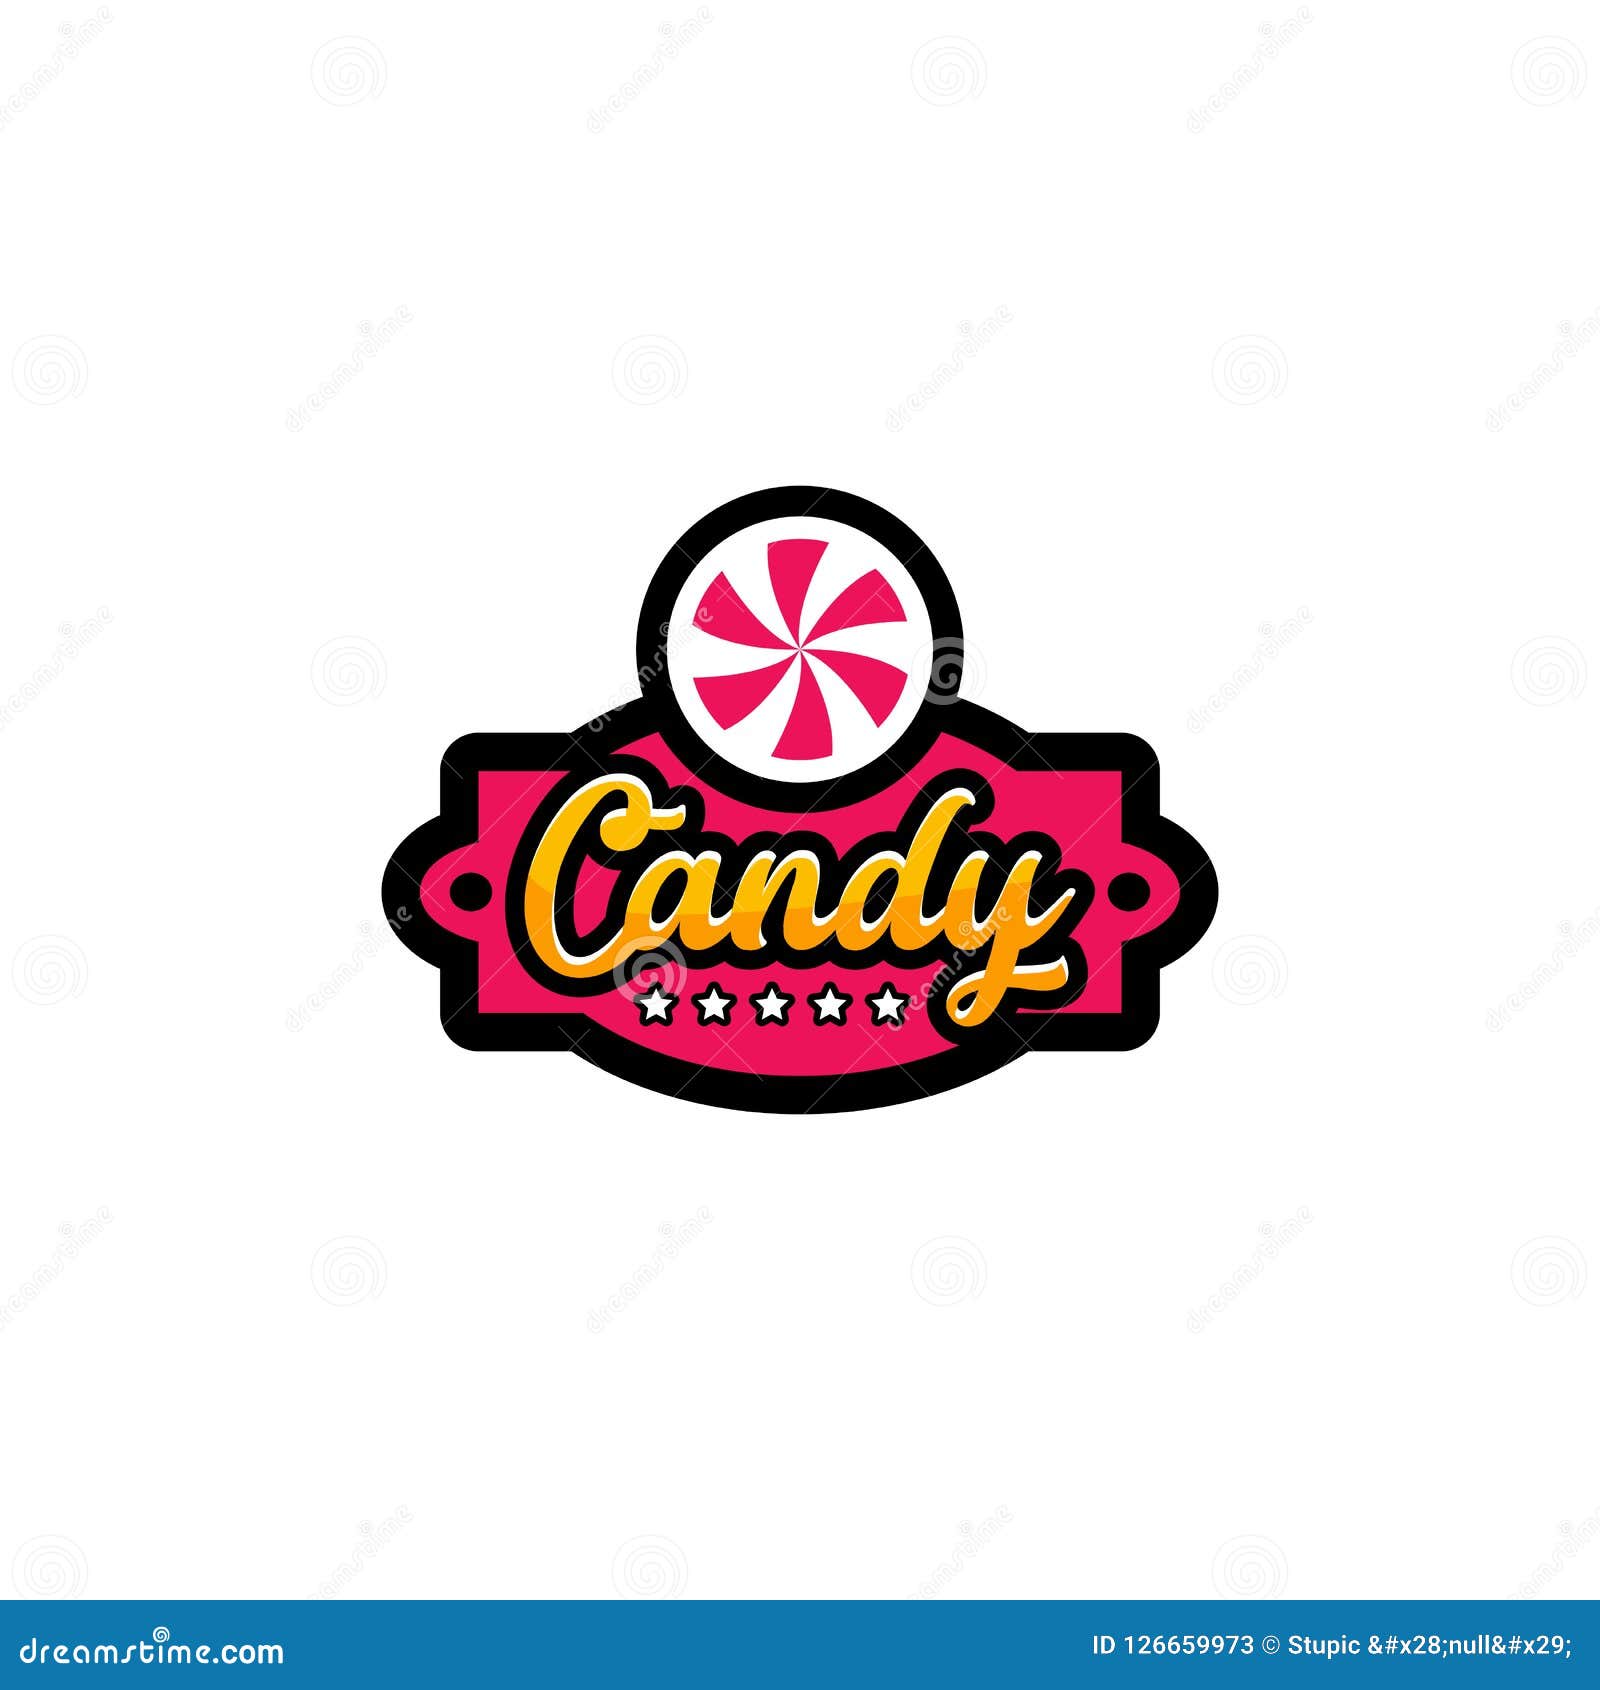 candy logo ideas 4